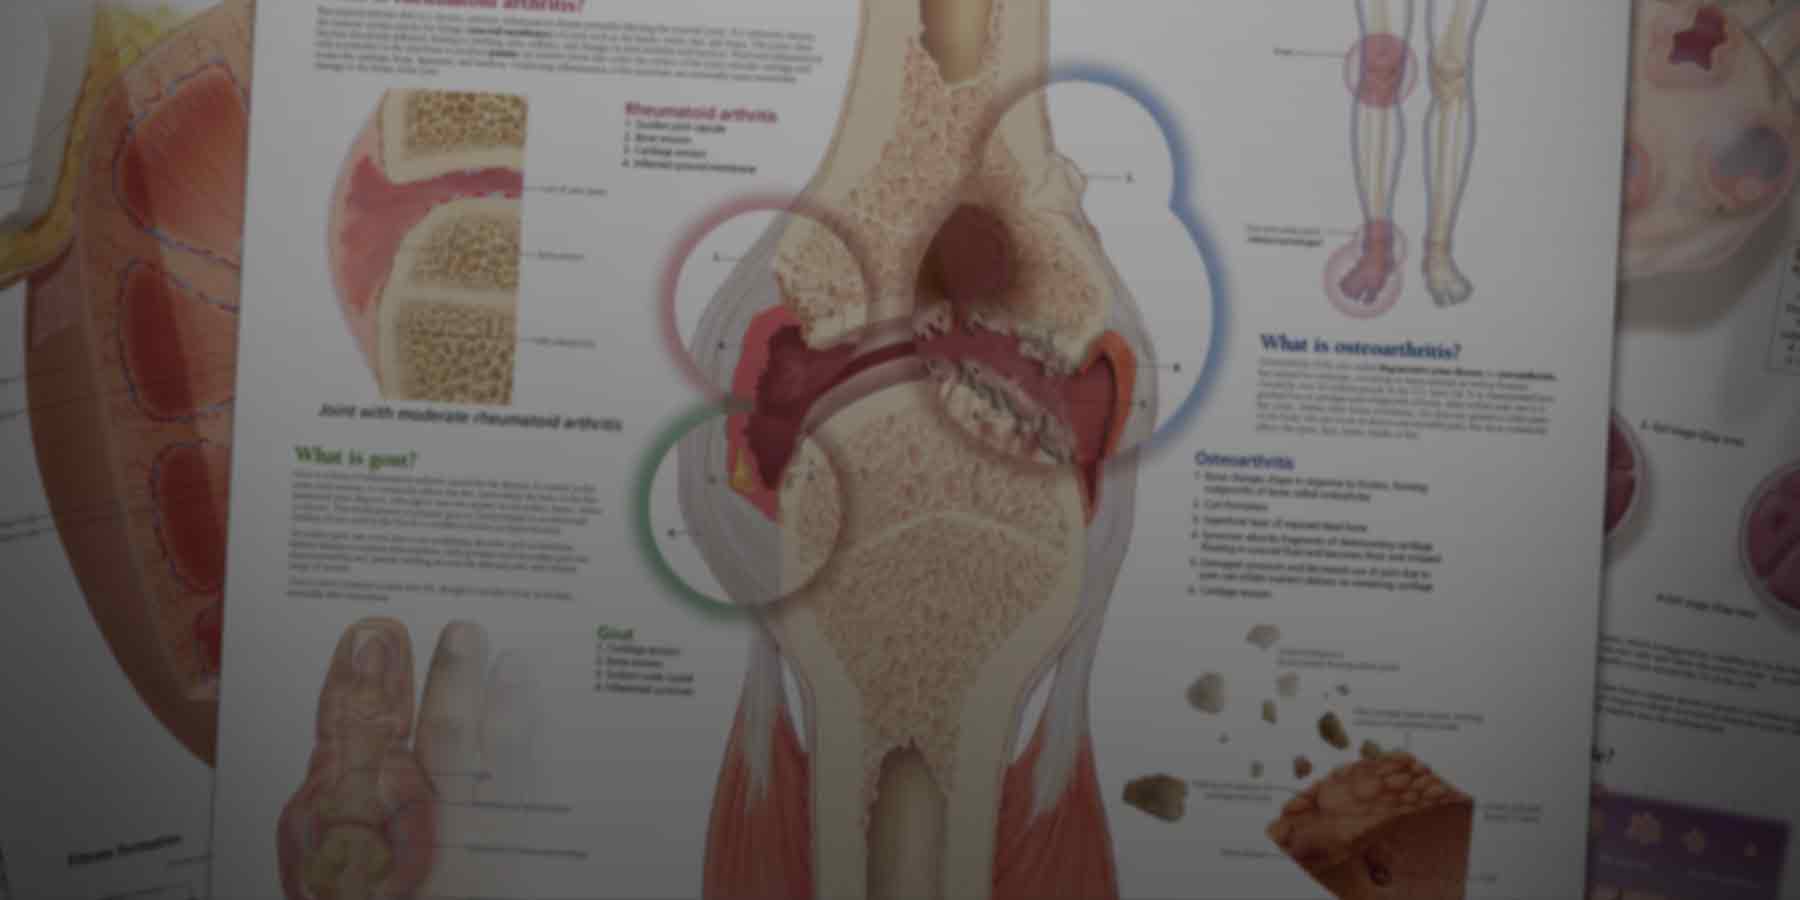 Human anatomy posters